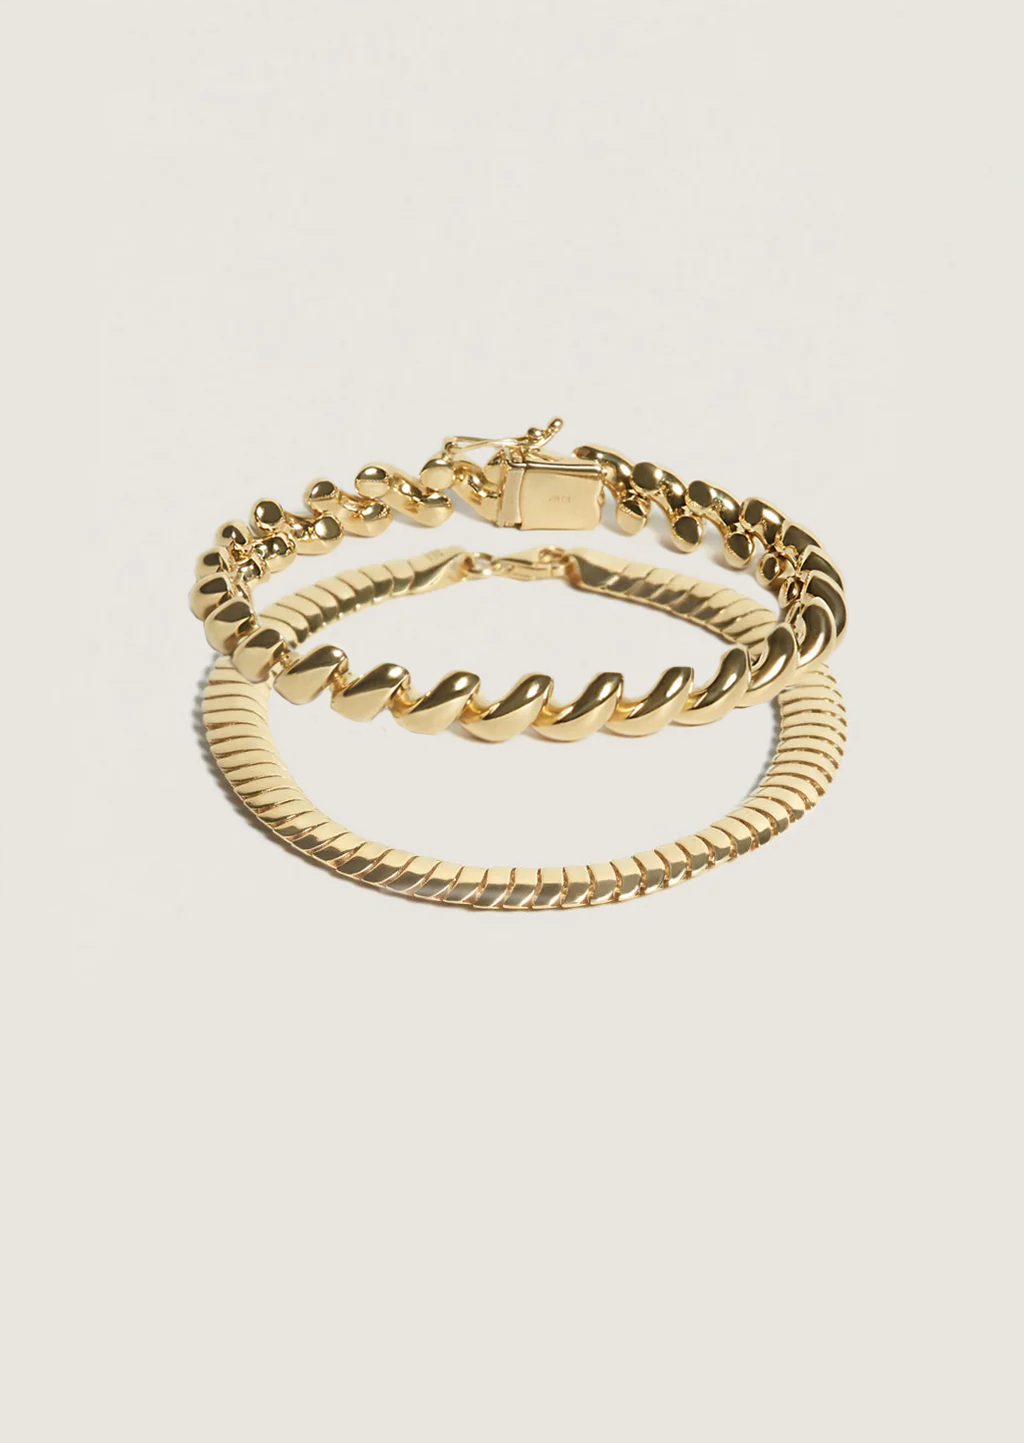 Cobra Chain & Hampshire House Bracelet Stack